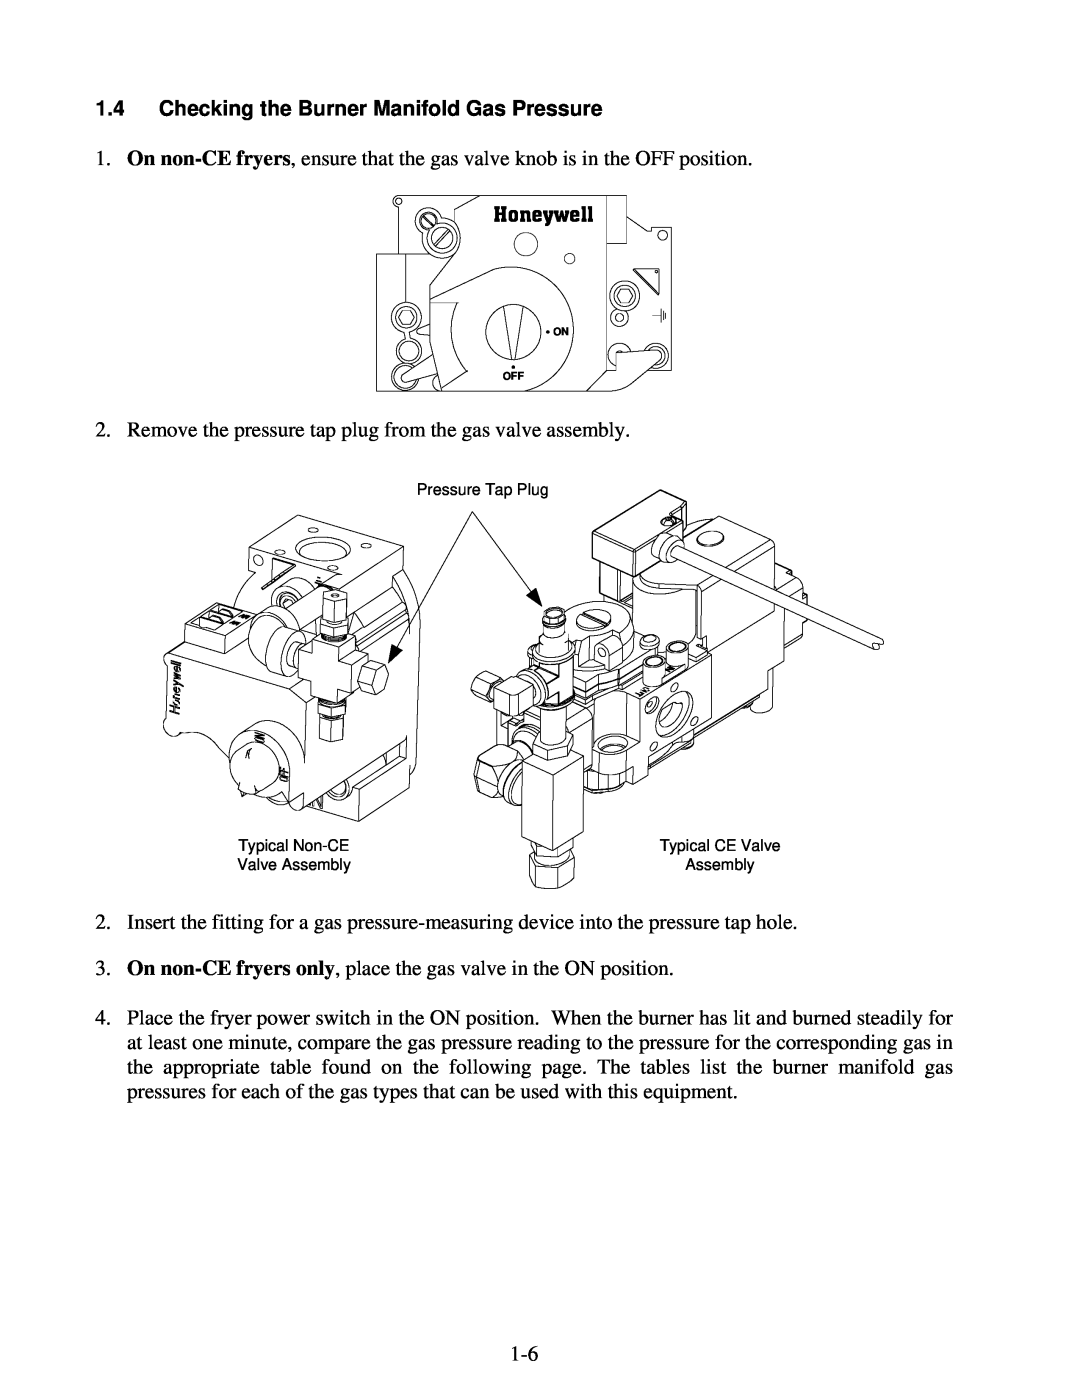 Frymaster H50 Series manual 1.4Checking the Burner Manifold Gas Pressure 